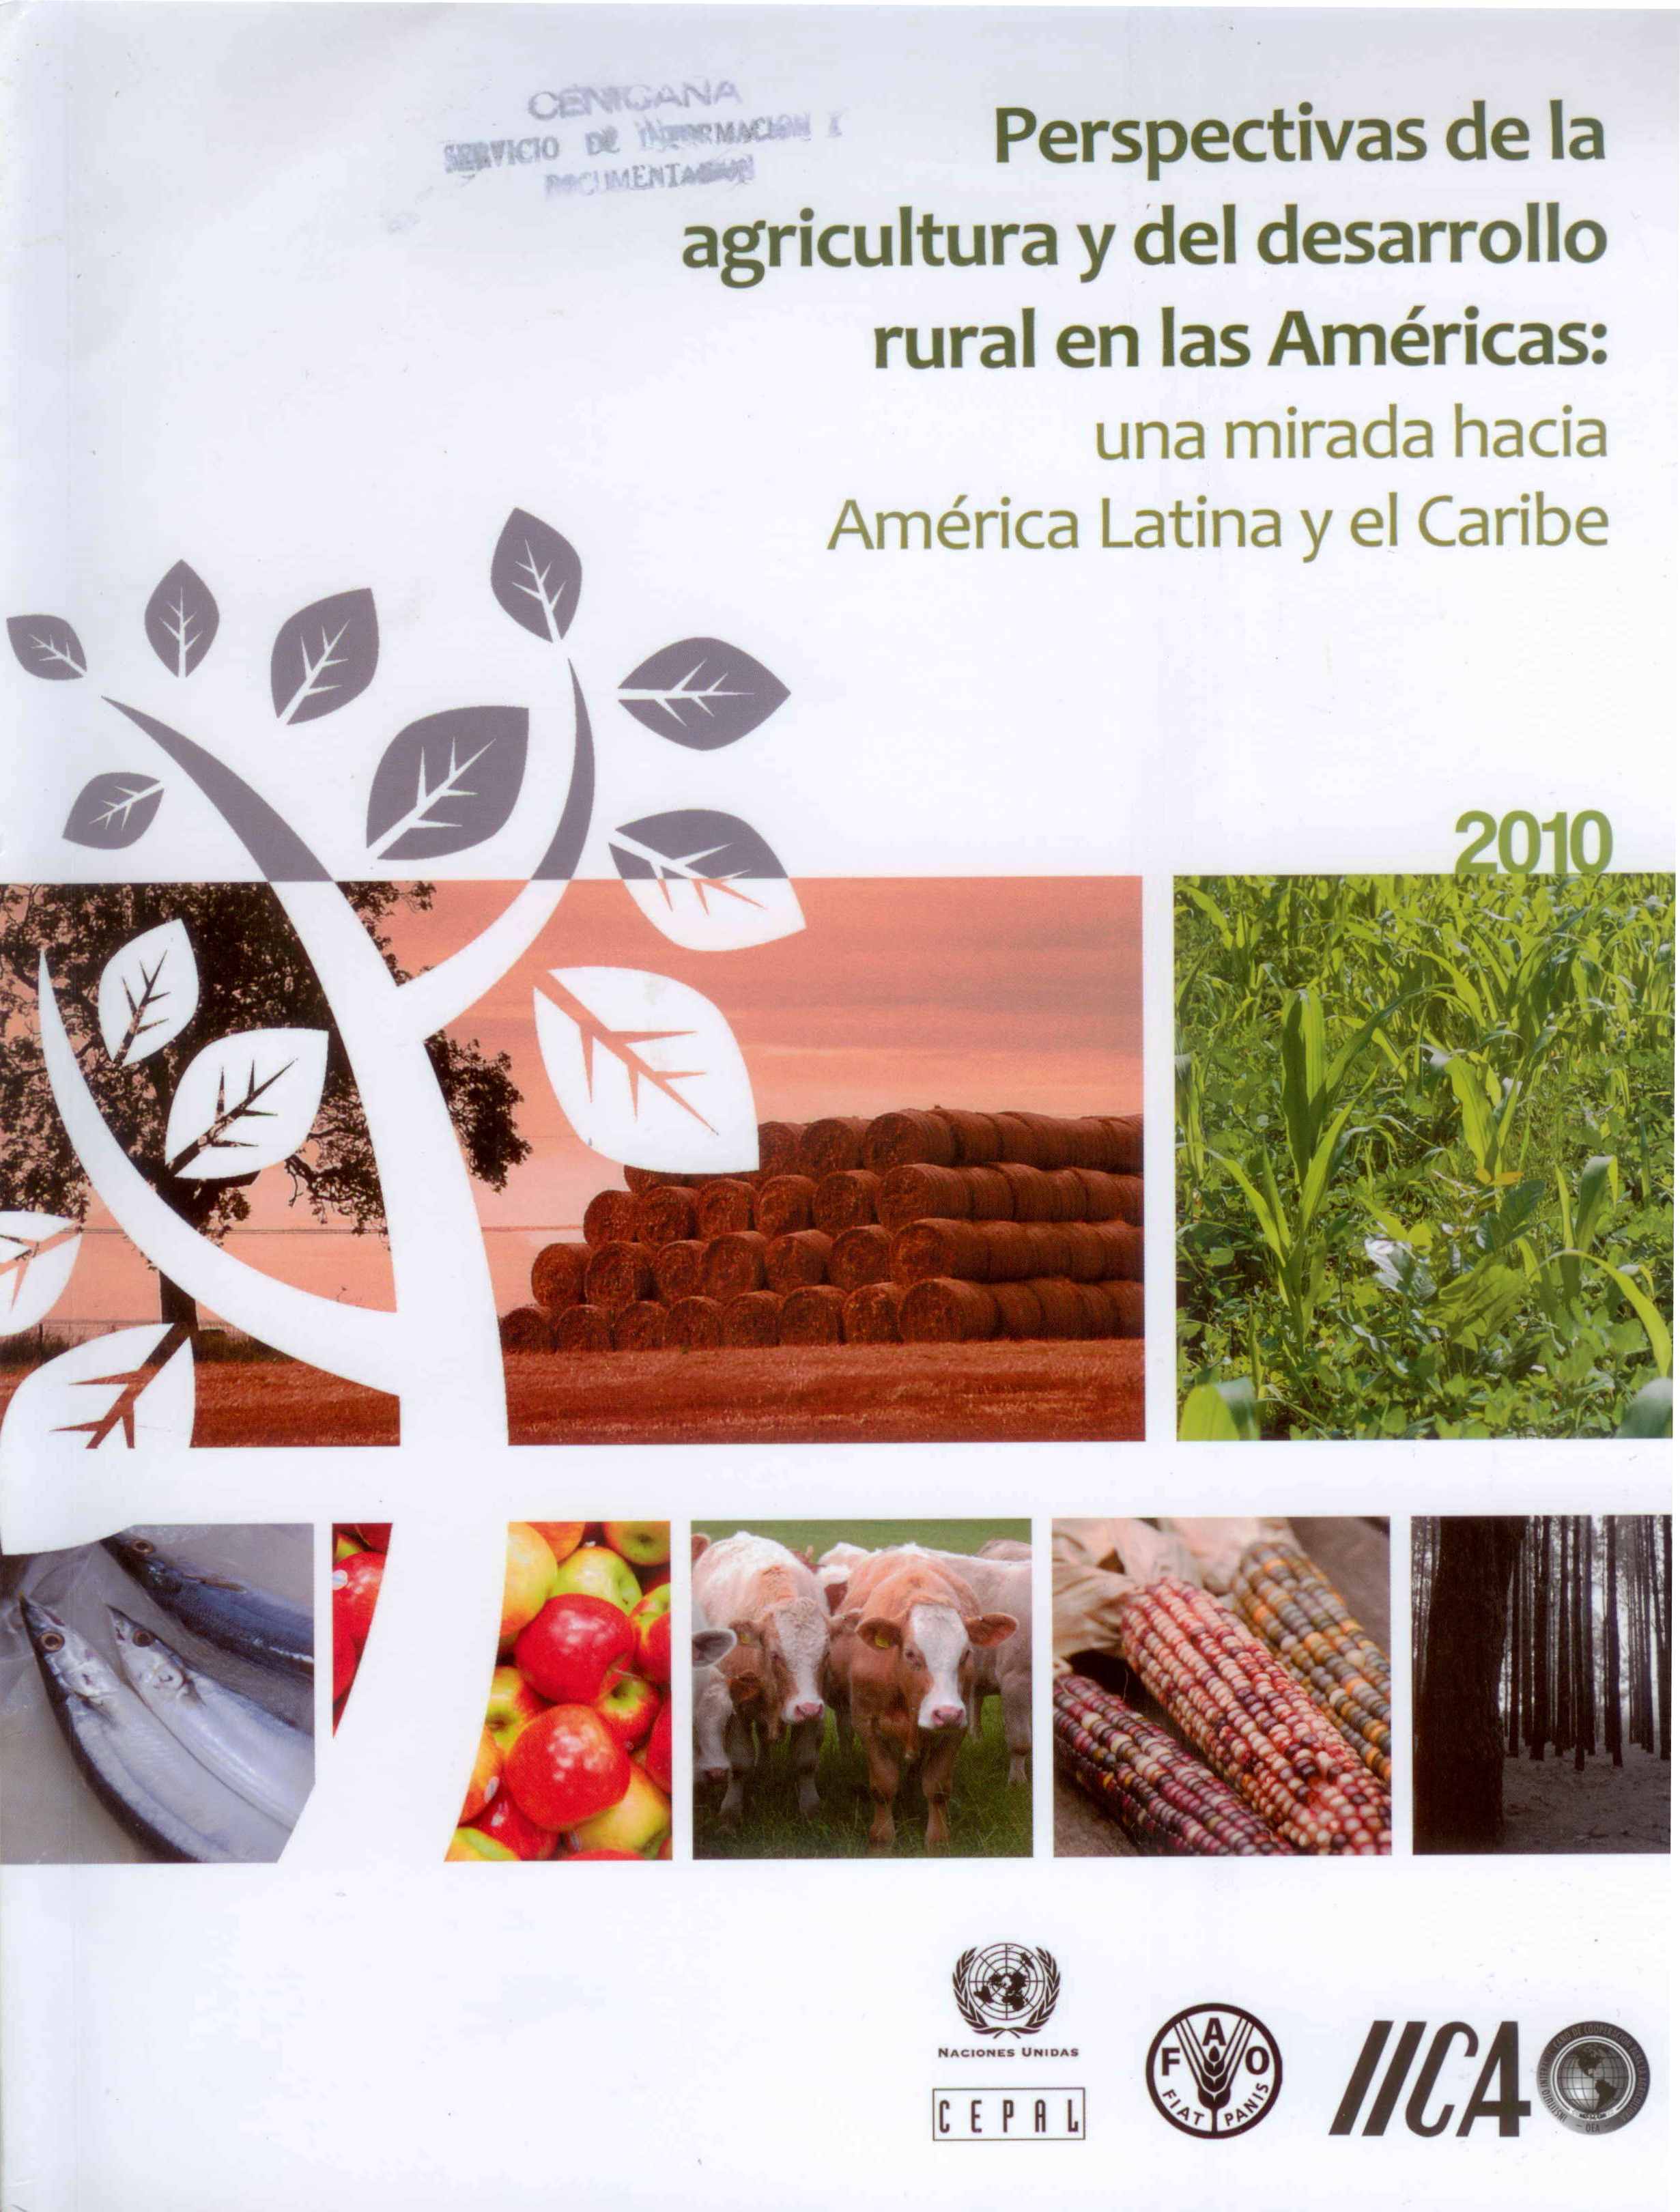 http://www.cenicana.org/investigacion/seica/imagenes_libros/2012/caratula_perspectivas_agricultura.jpg